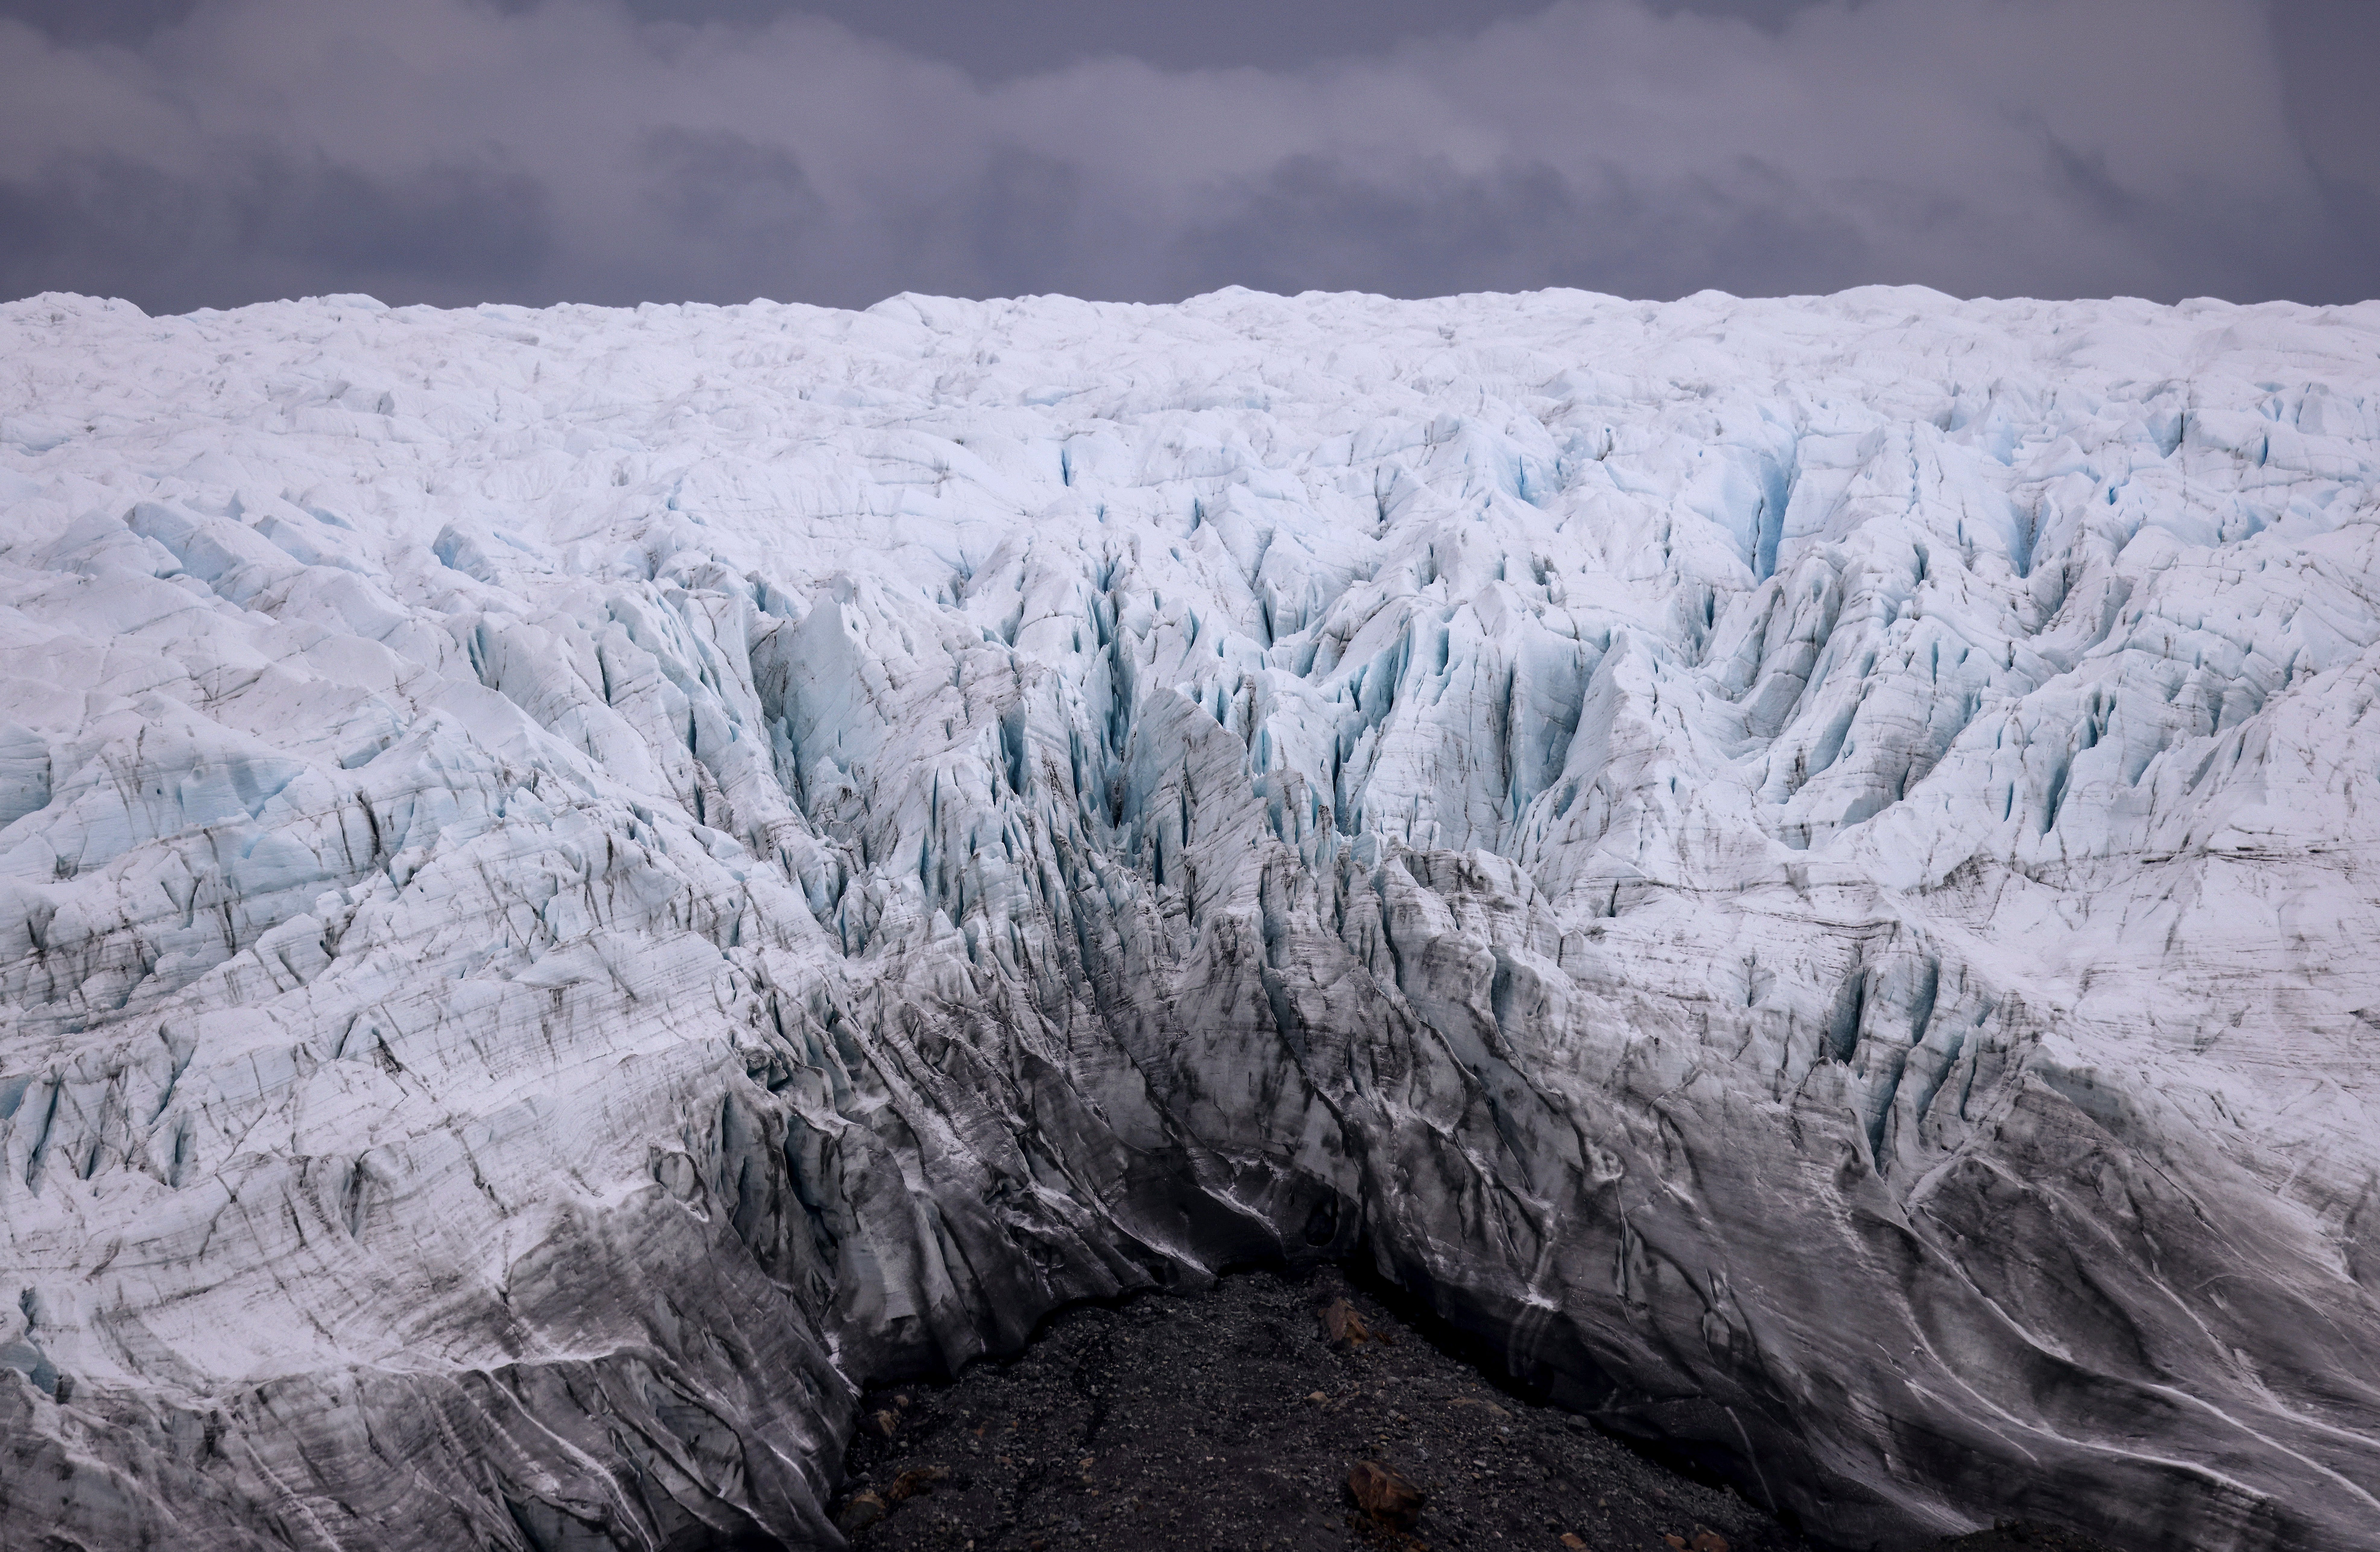 Beneath the Greenland ice sheet lies a 31-kilometer diameter creater from a meteorite impact